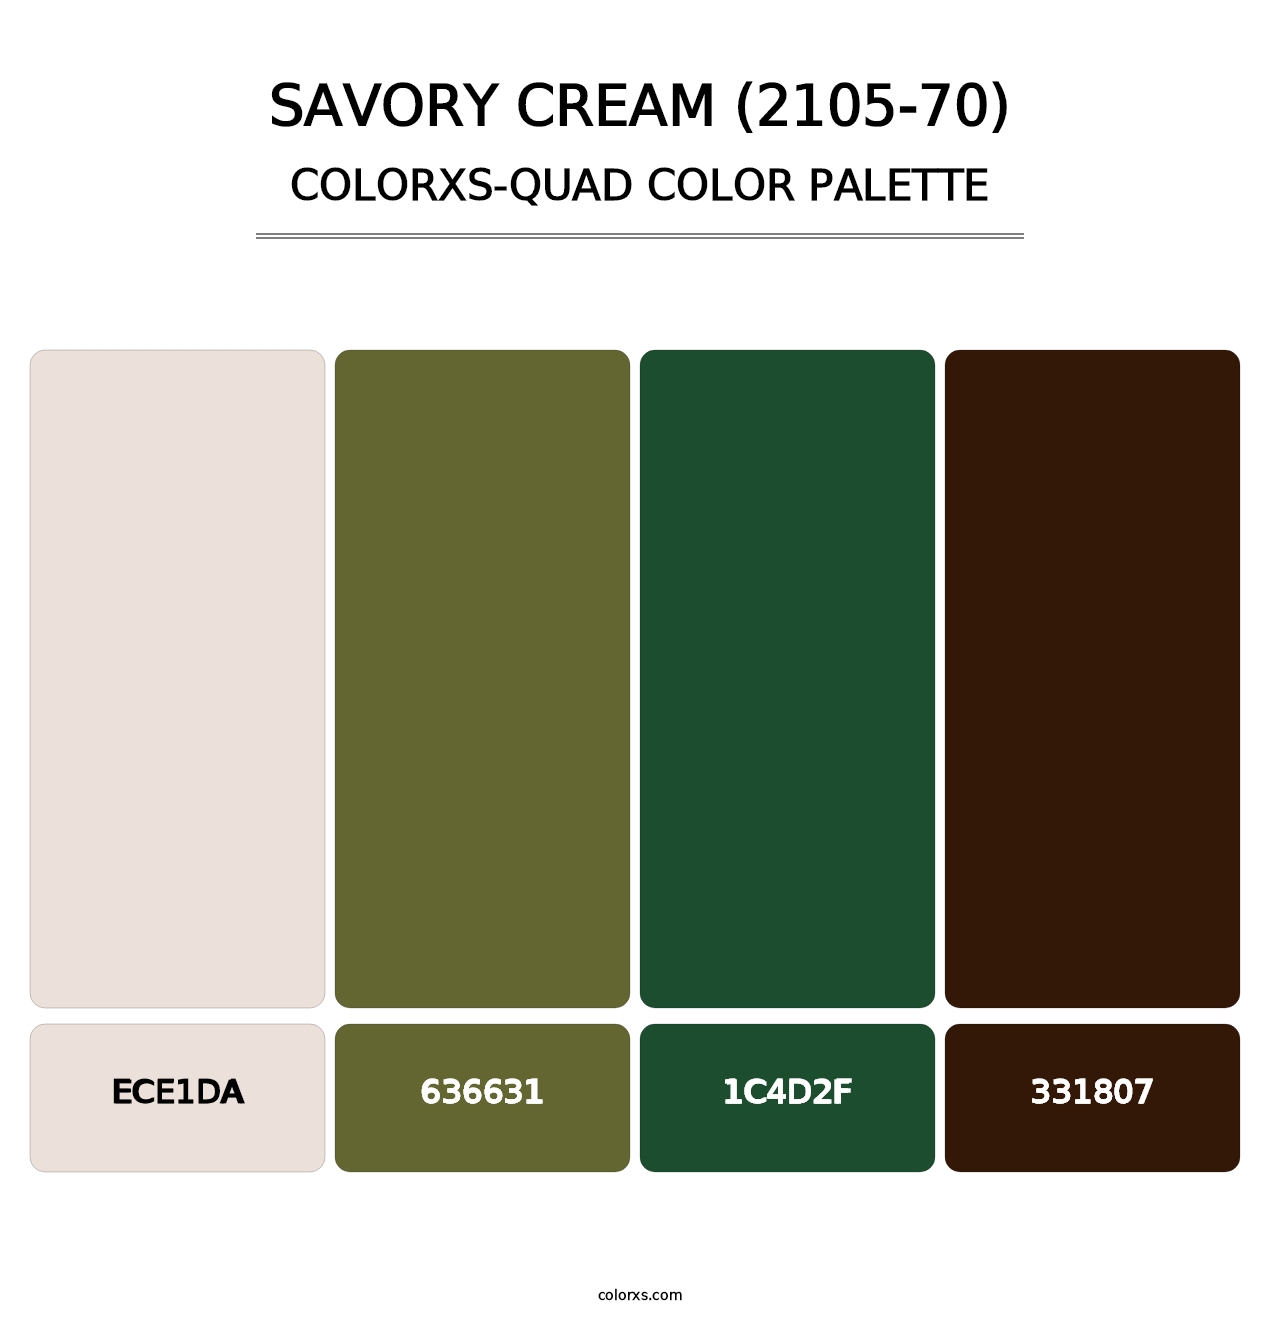 Savory Cream (2105-70) - Colorxs Quad Palette